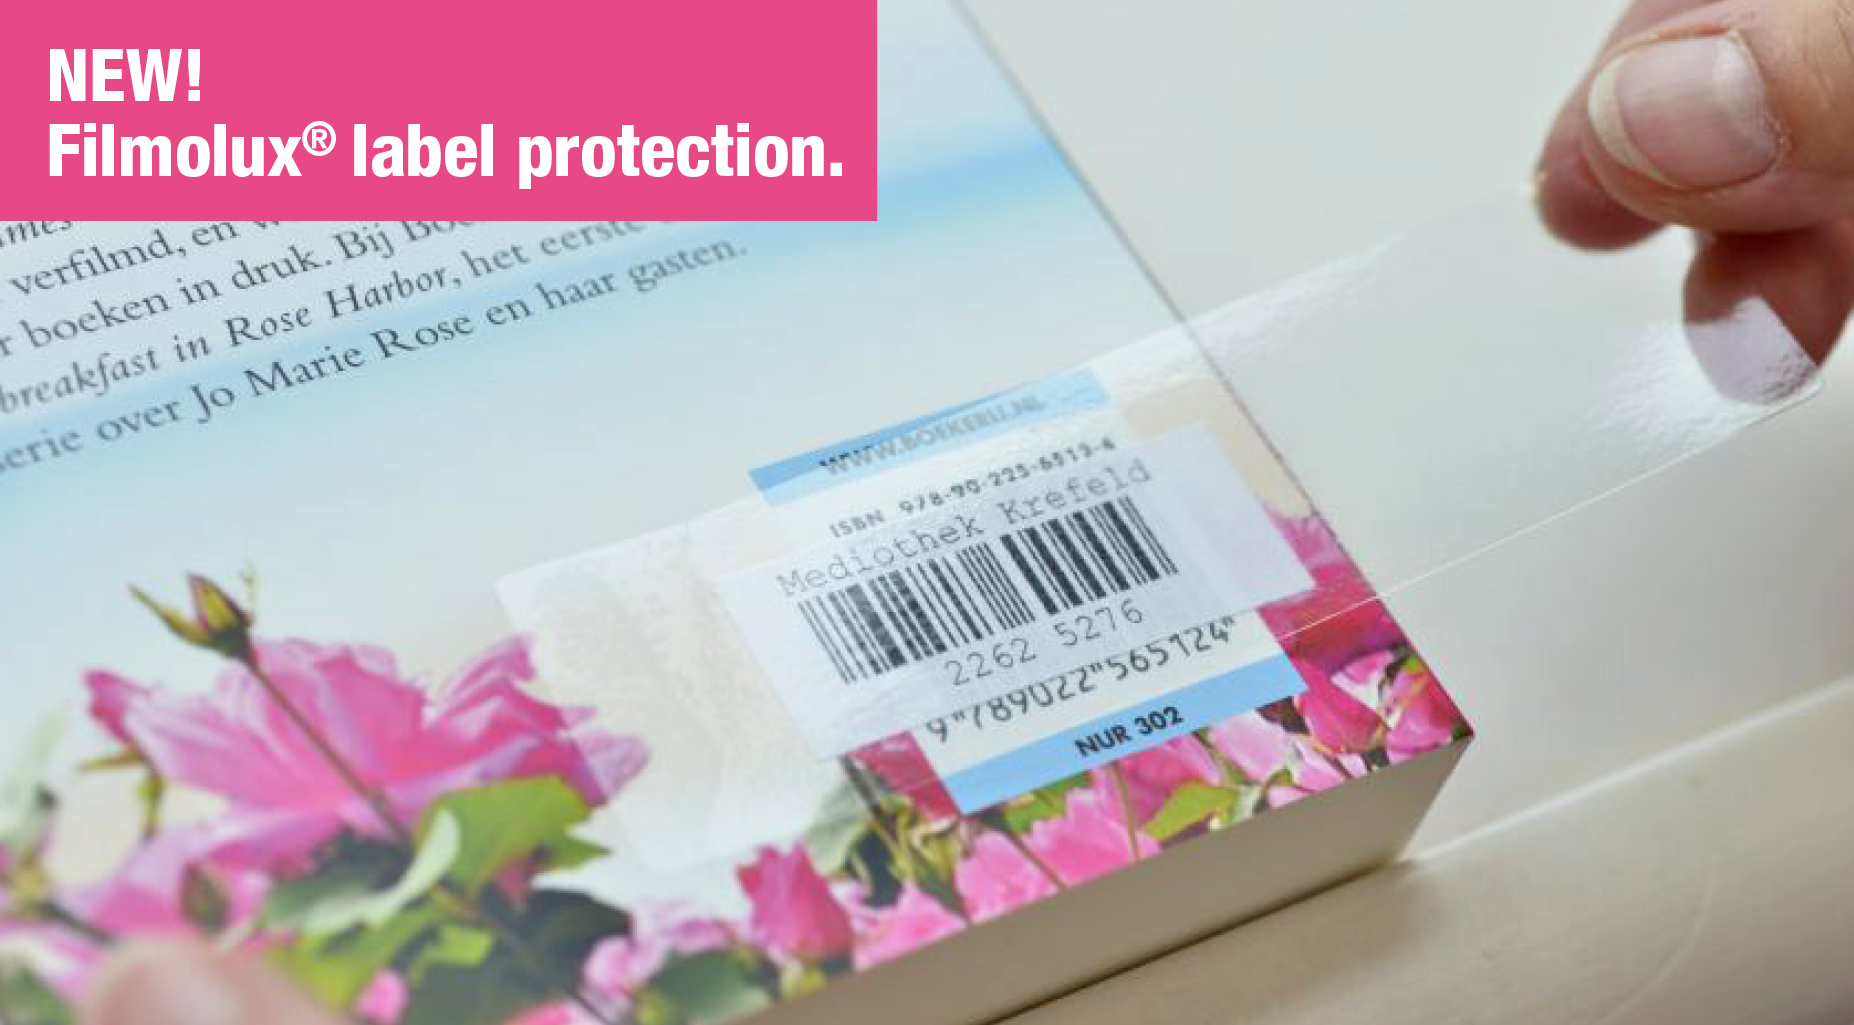 New! Filmolux label protection